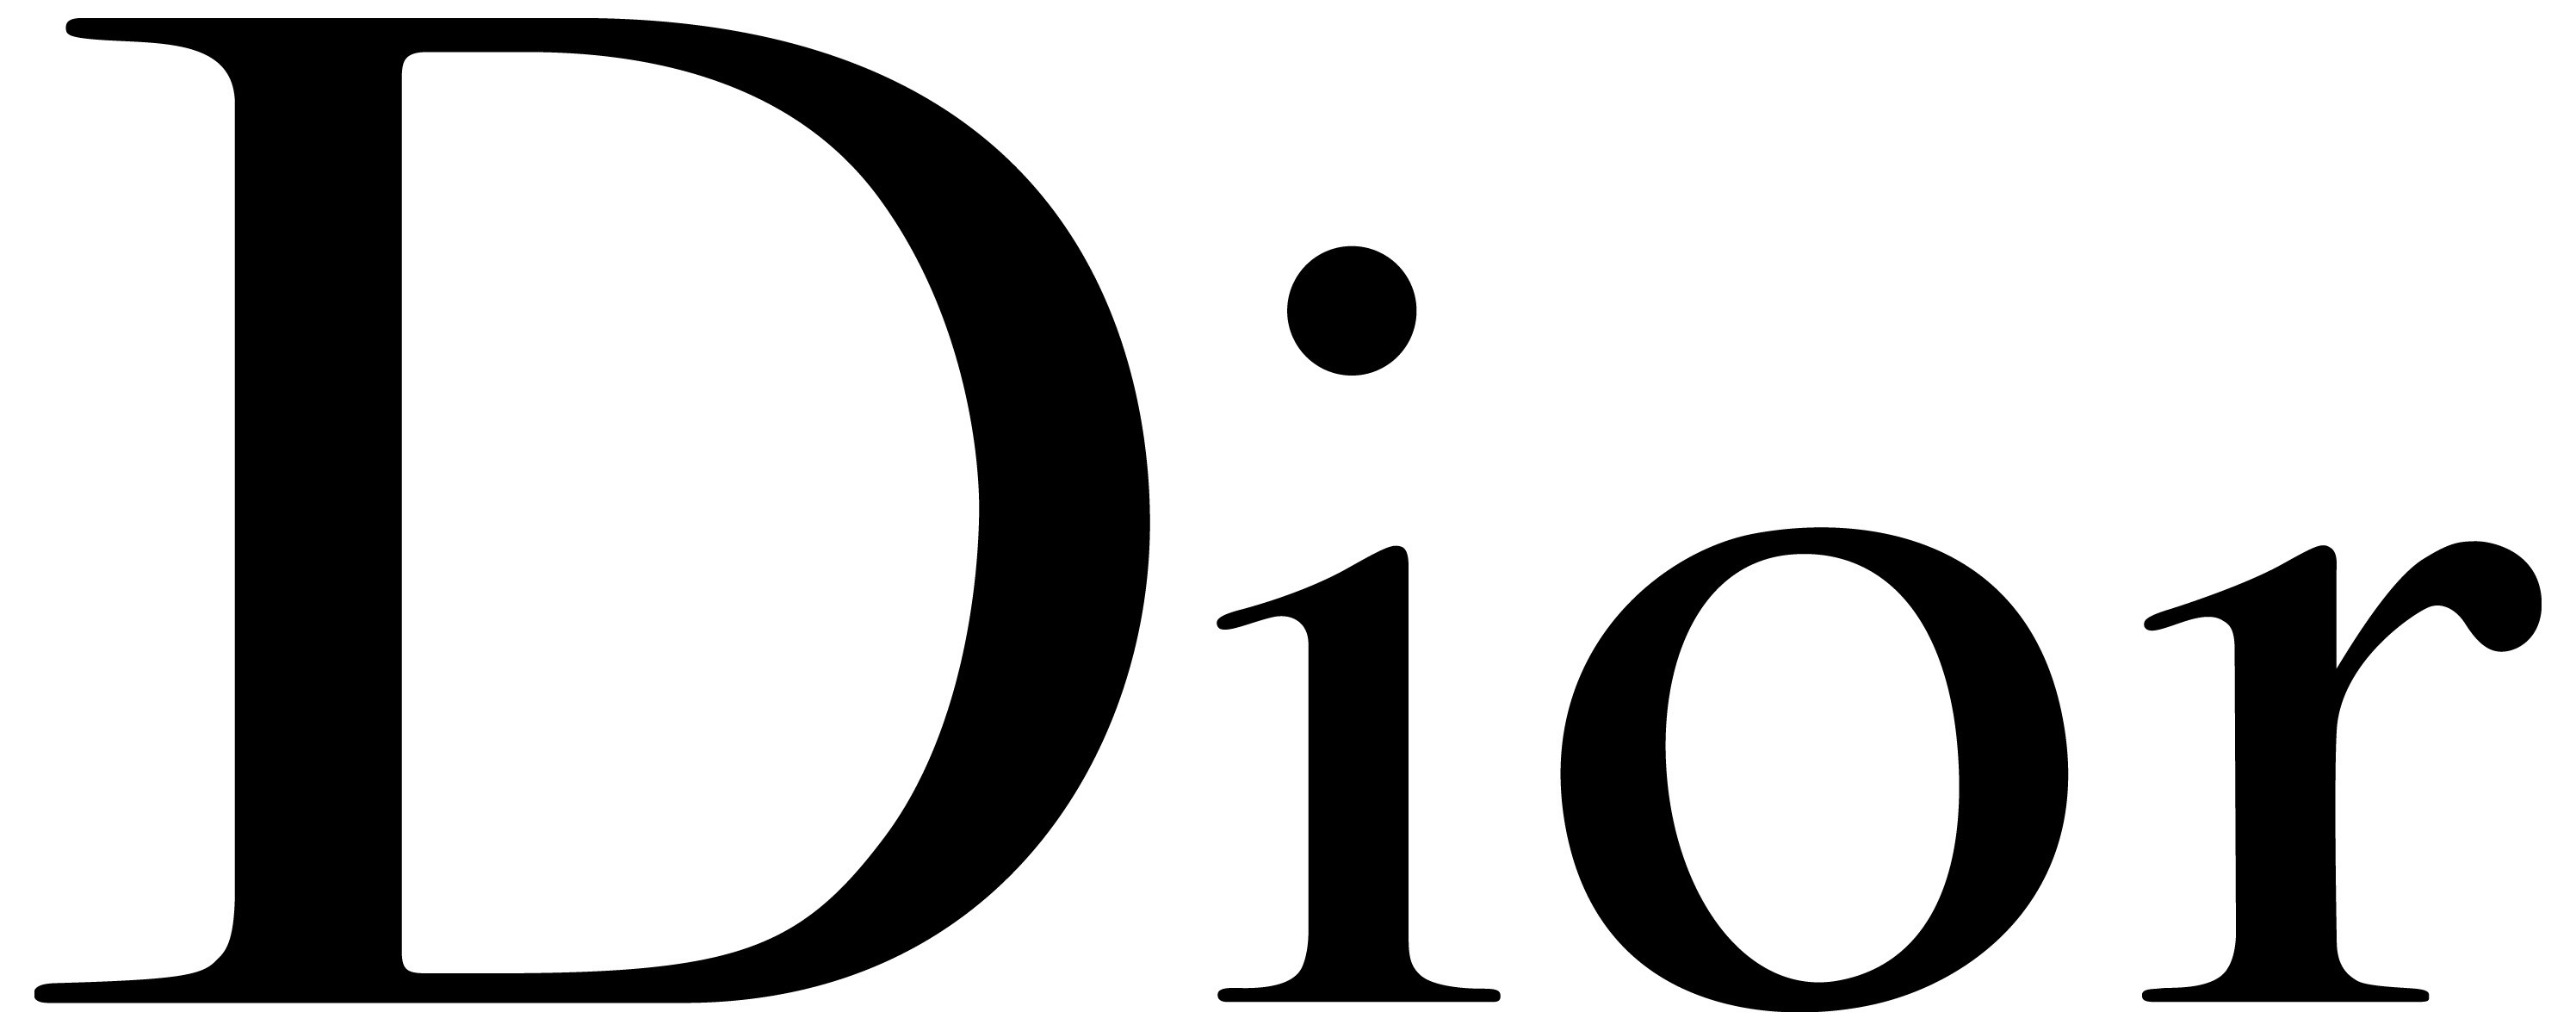 Christian Dior Logo Wallpaper